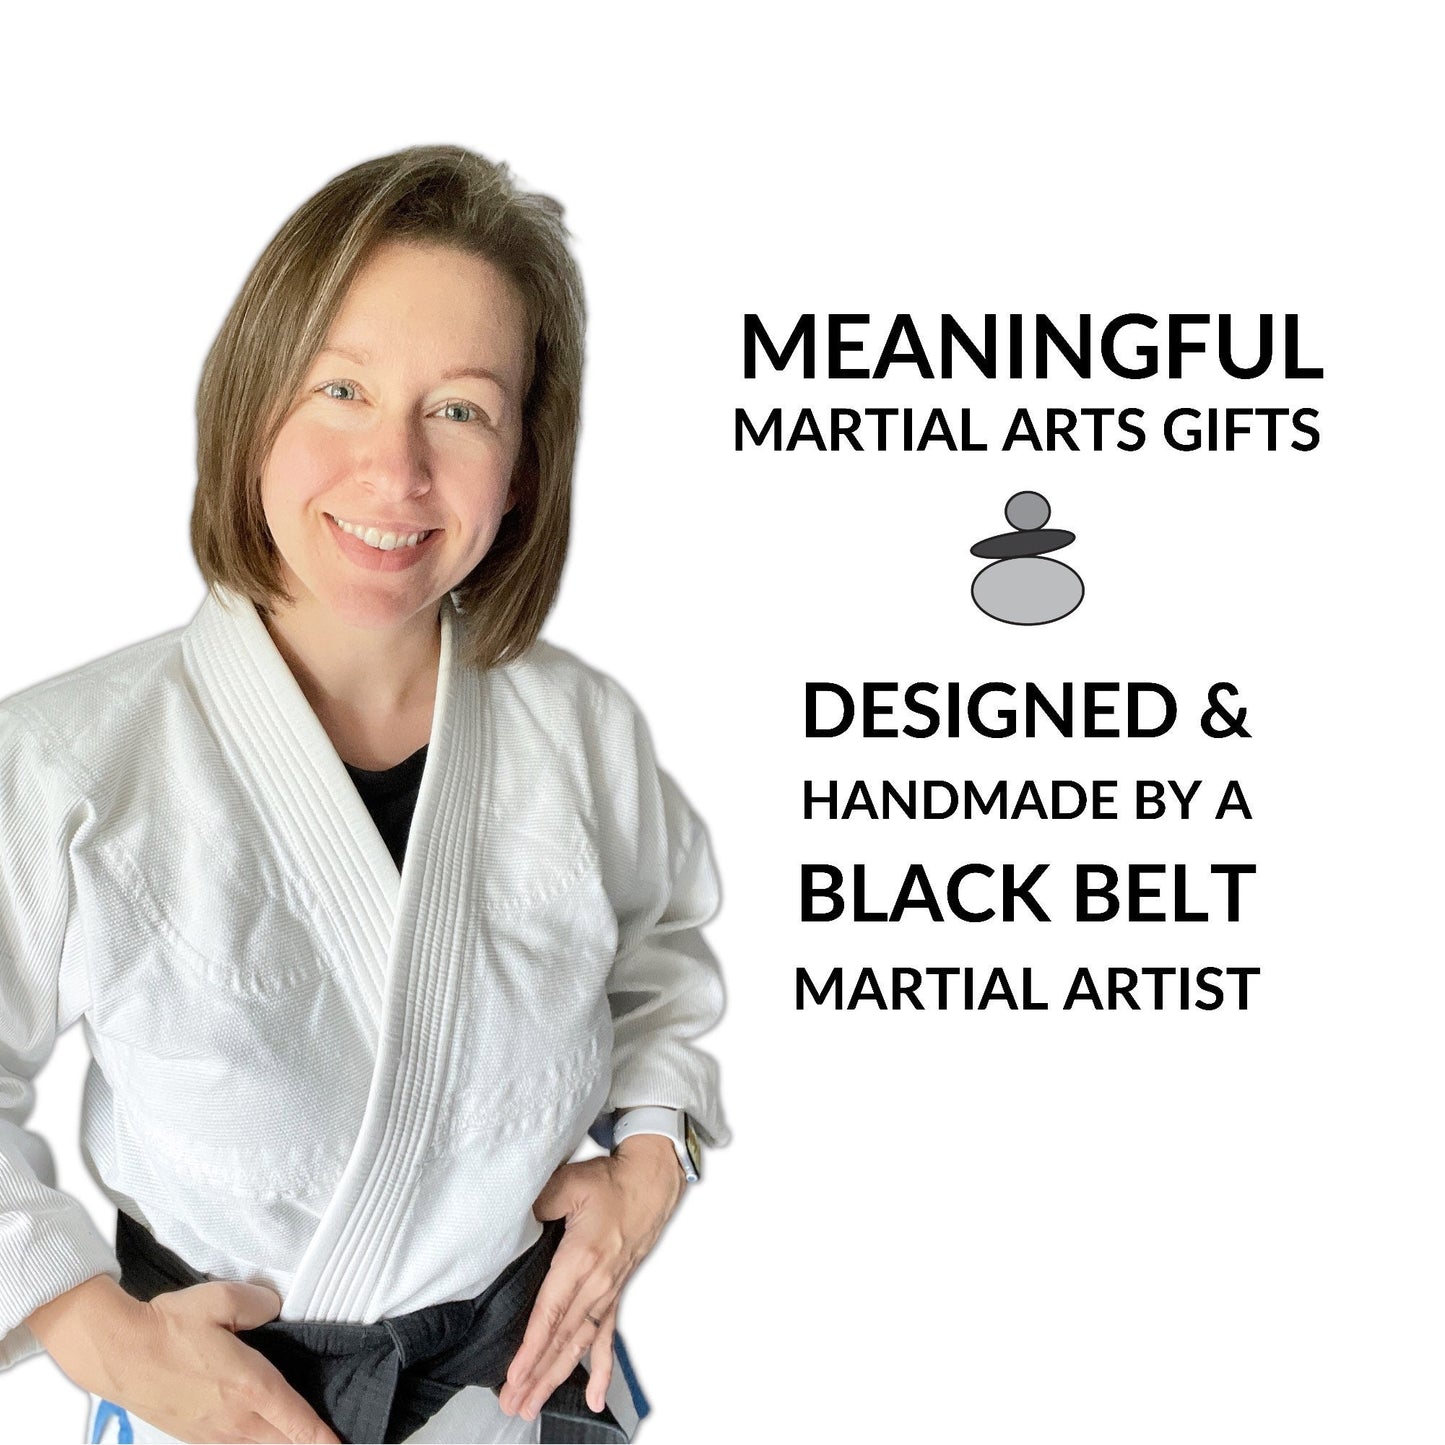 Best Jiu Jitsu Professor Gift Idea, Personalized Best Prof Award, Martial Arts Instructor, Brazilian Jiu Jitsu, BJJ Gold Medal